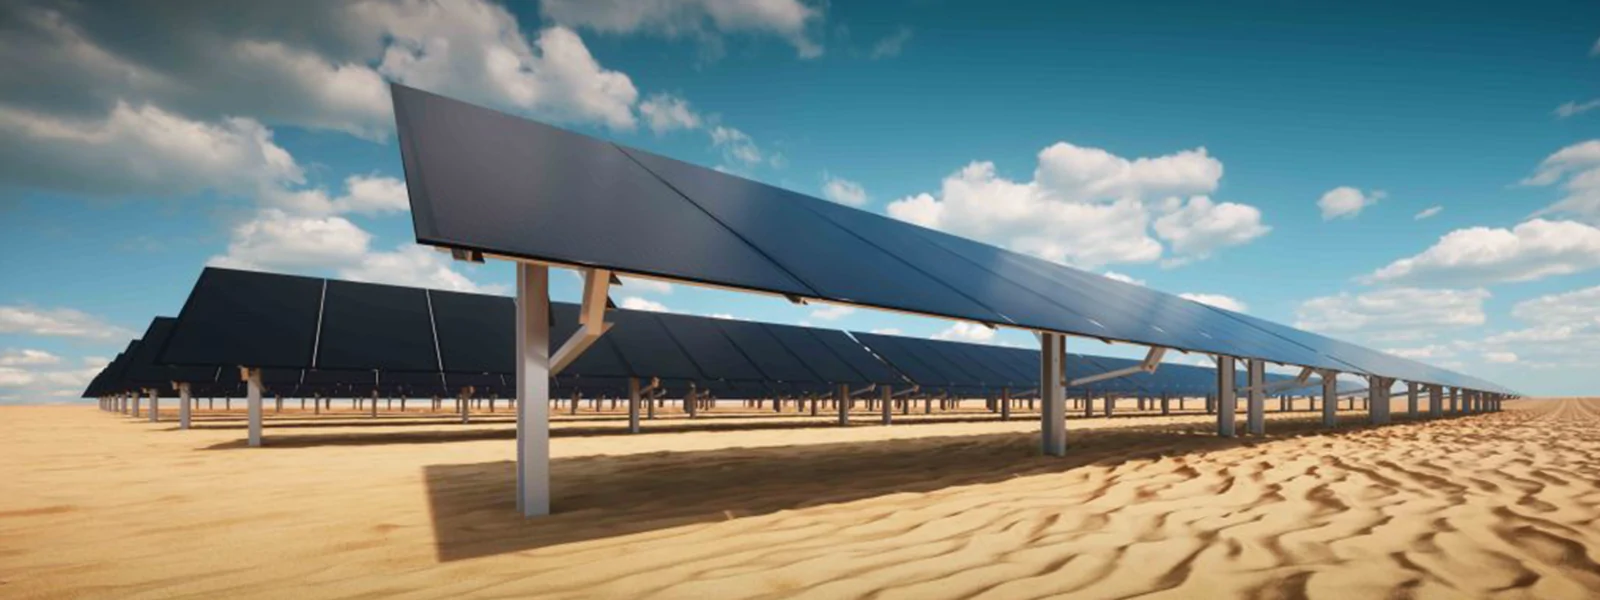 Sahara-Strom: Wüste als wahres Energie-Paradies?- Image